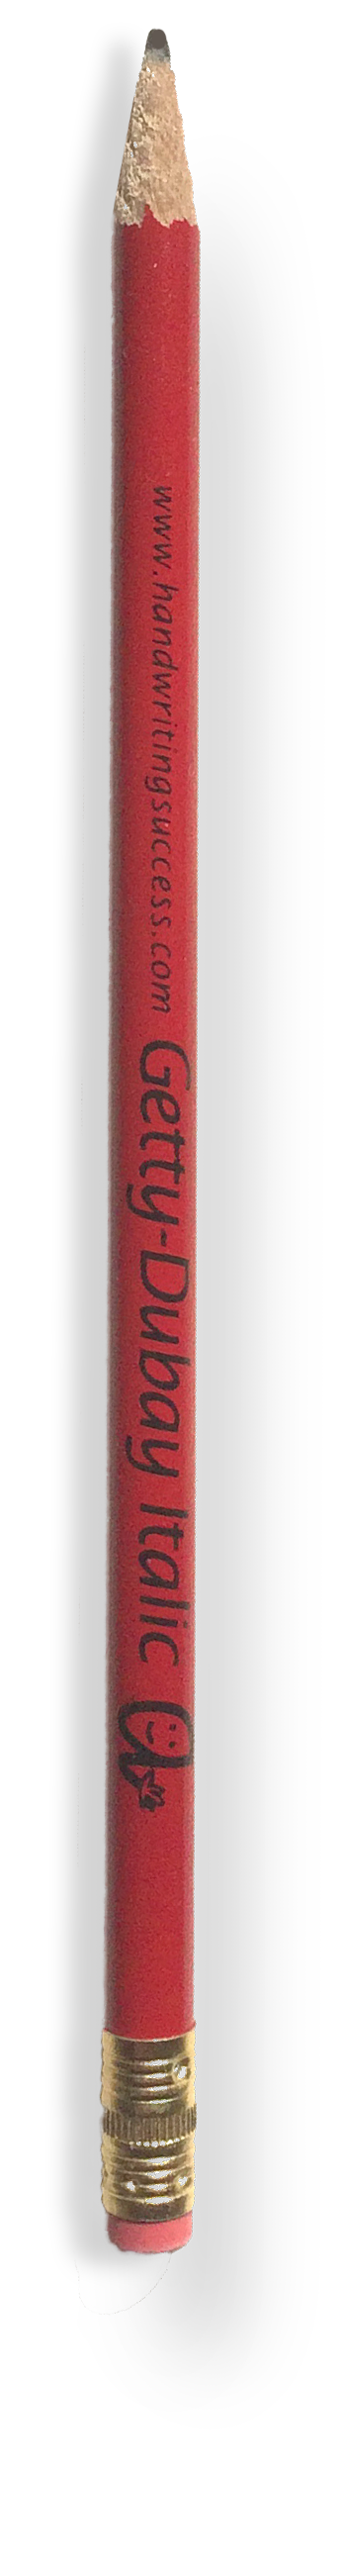 GDI red pencil shadow